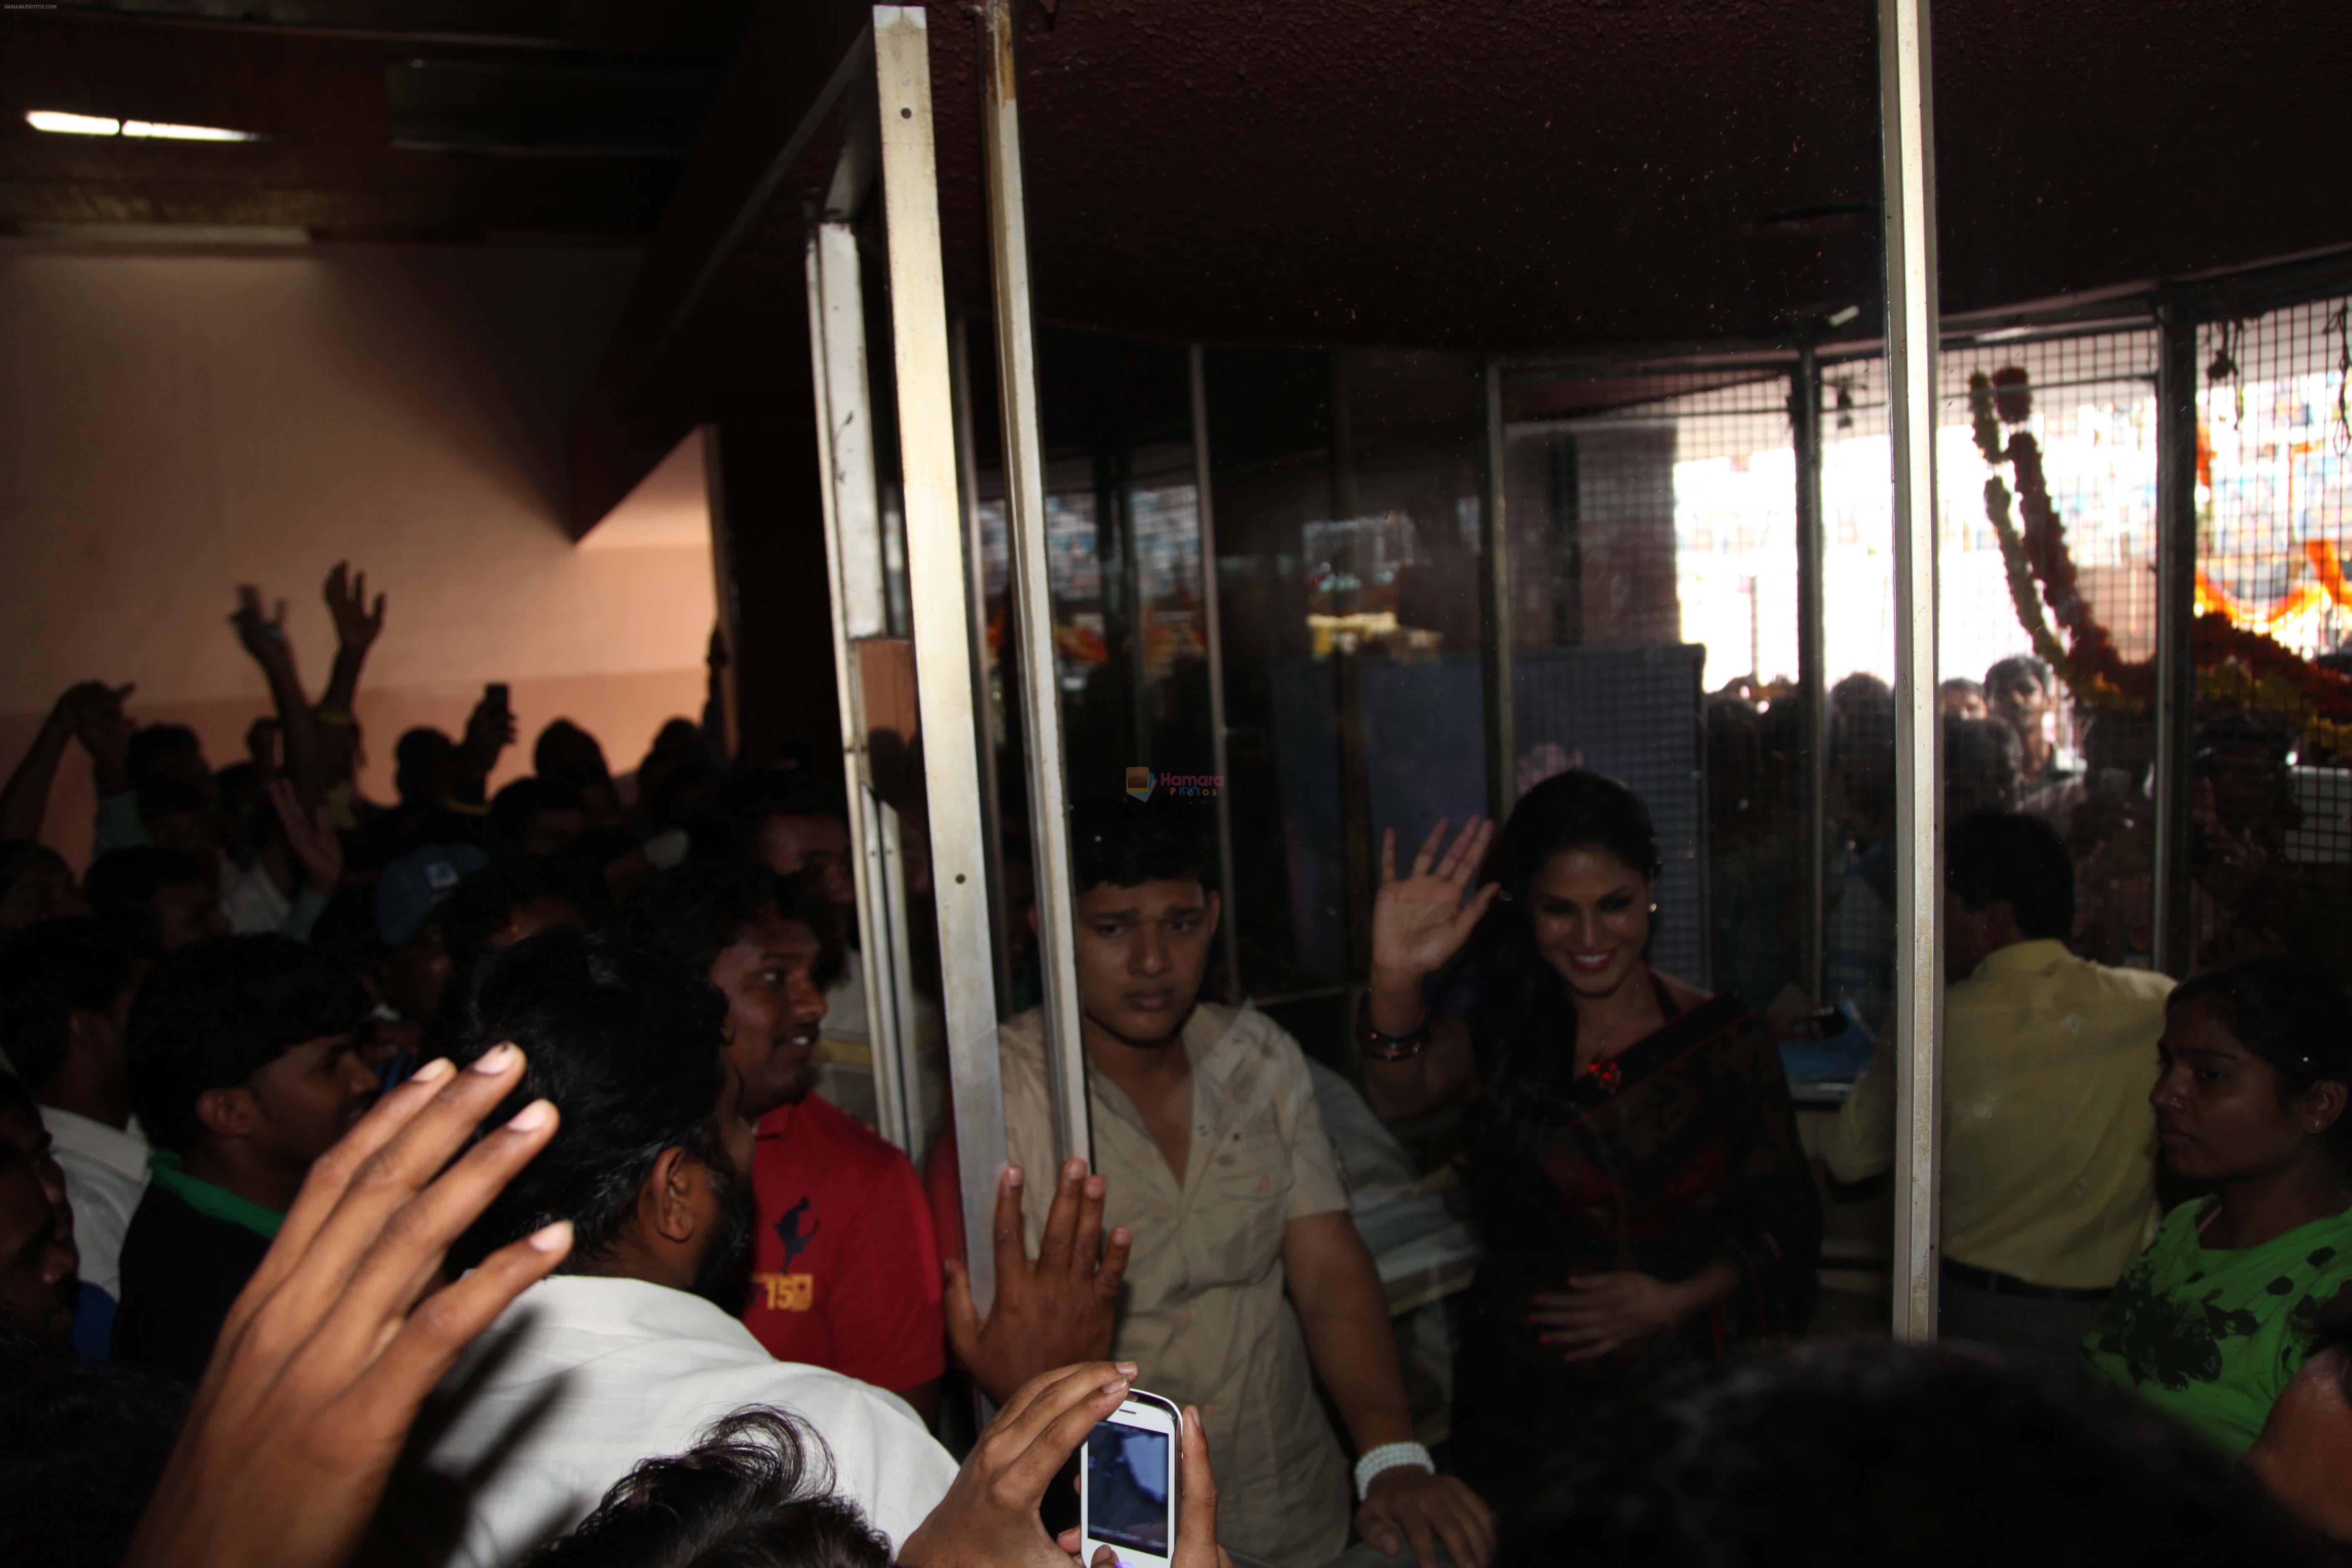 Veena Malik's Silk Sakkath Hot Maga movie tickets selling like hot cakes on 4th Aug 2013